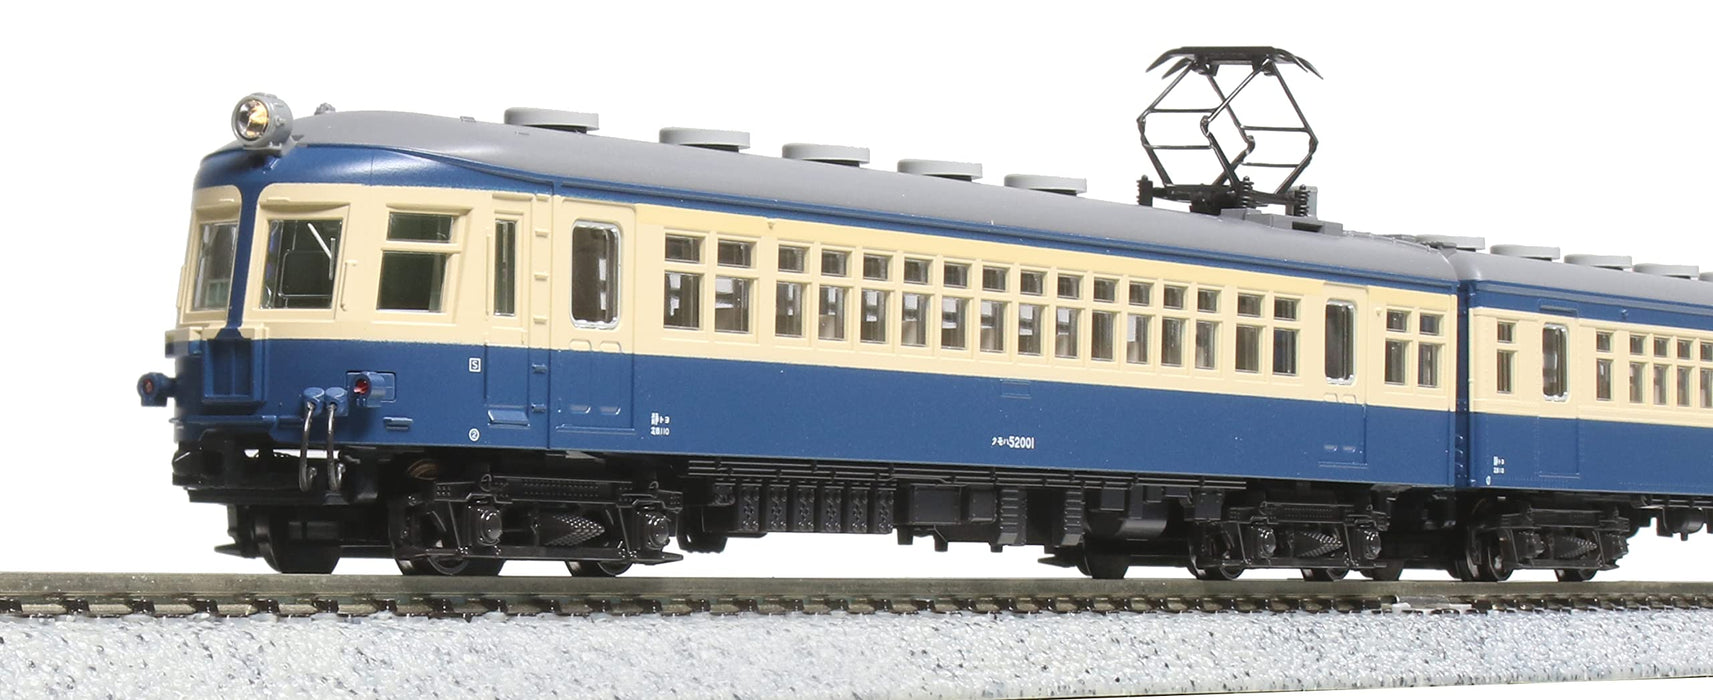 Kato Railway Model Train Set - N Gauge Kumoha52 1st Edition Iida Line 4-Car 10-1764